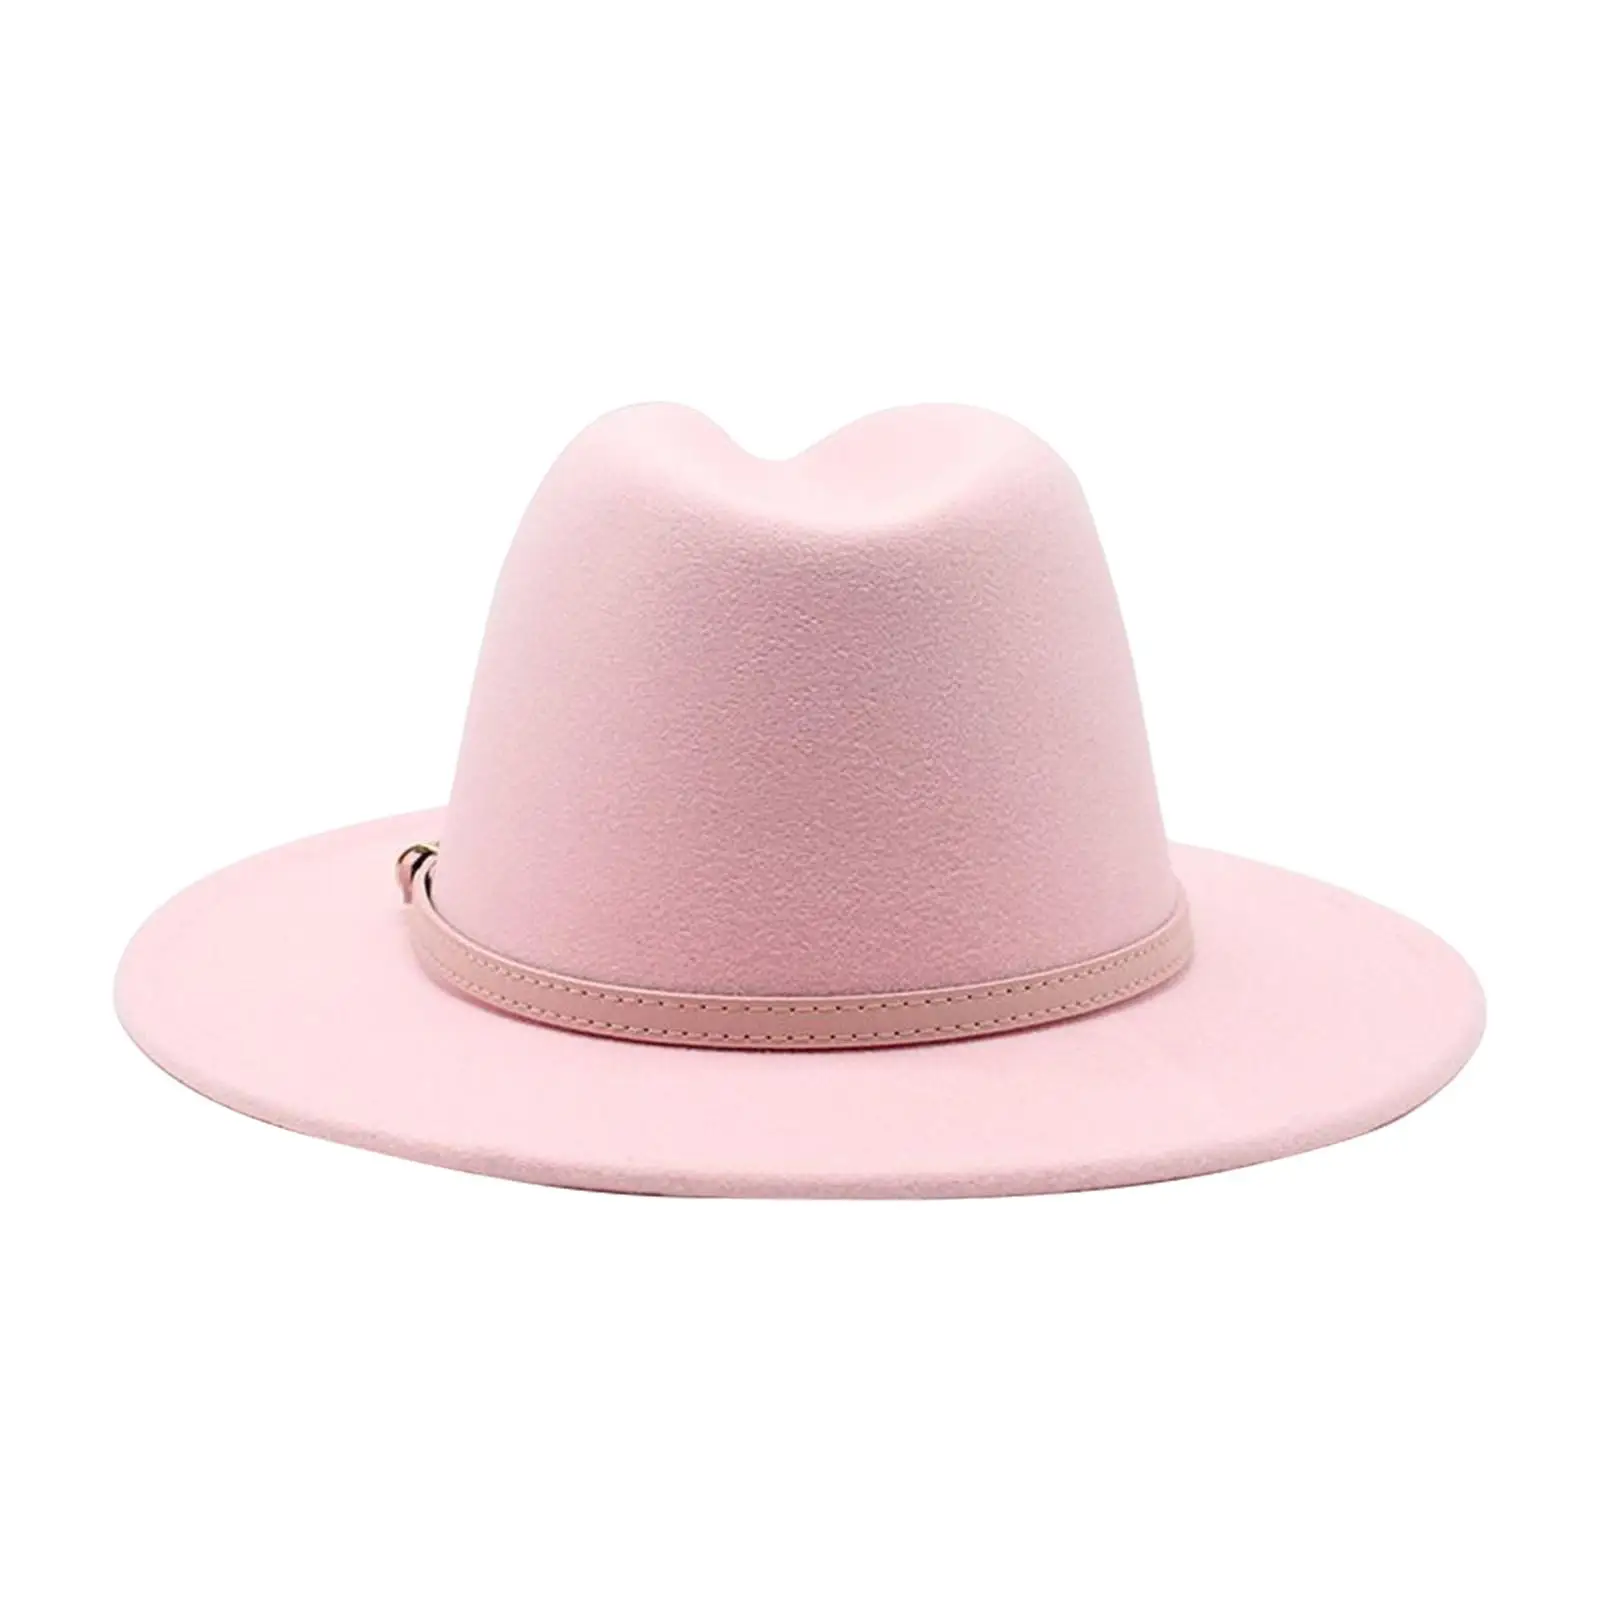 Women Fedora Hats Headwear Wide Brim Comfortable Floppy Panama Hat for Holiday Fall Winter